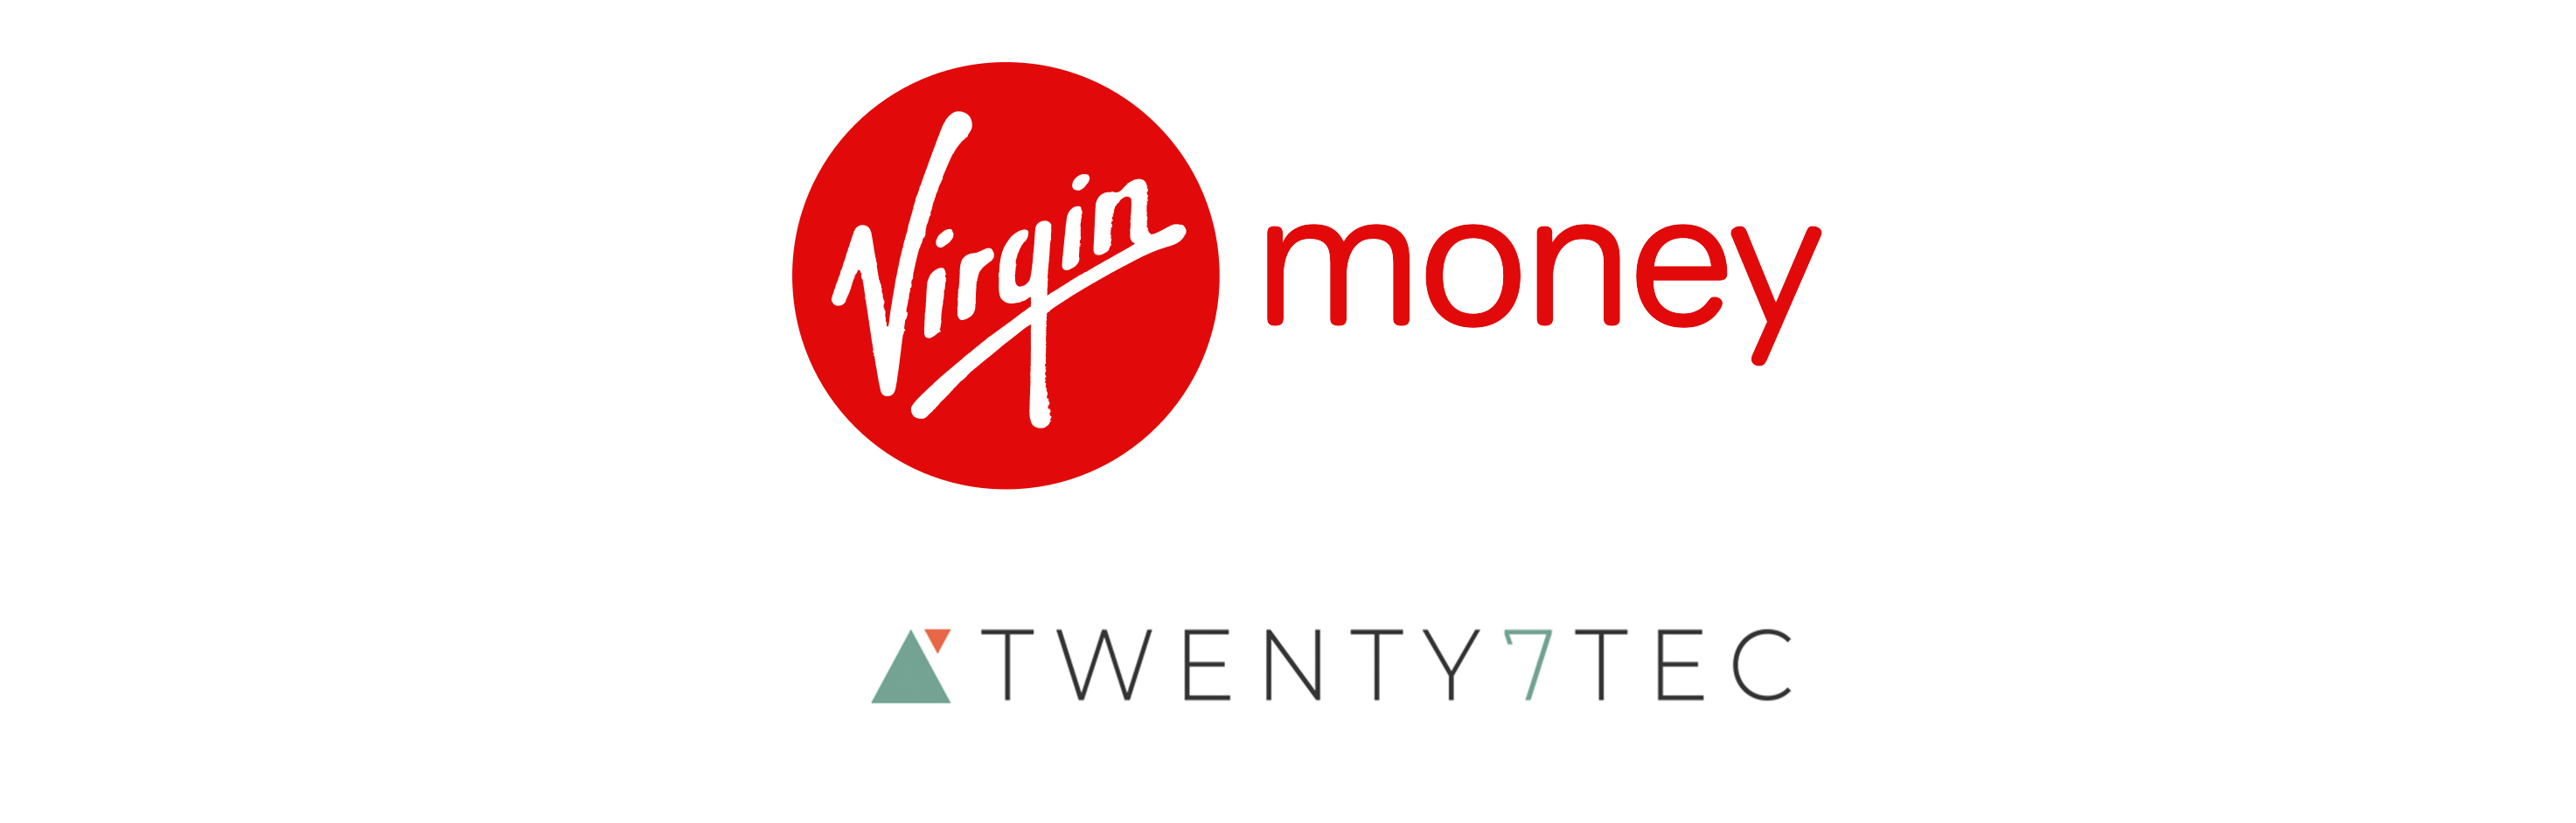 virgin moneytwenty7tec